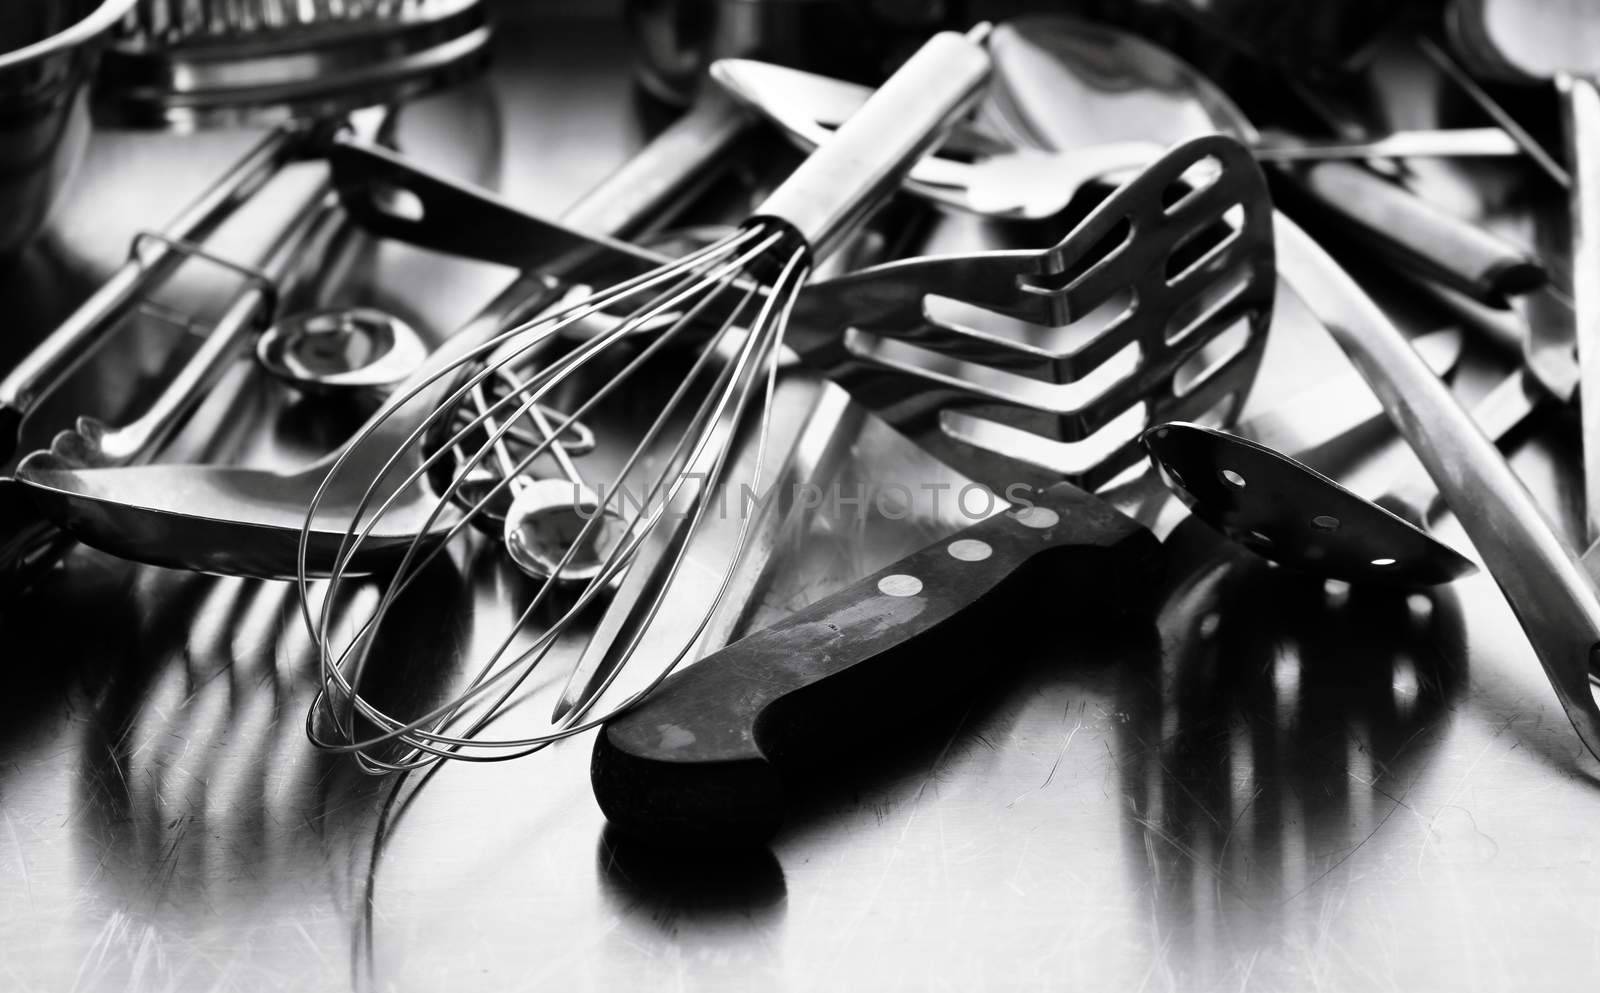 kitchen utensils by neil_langan